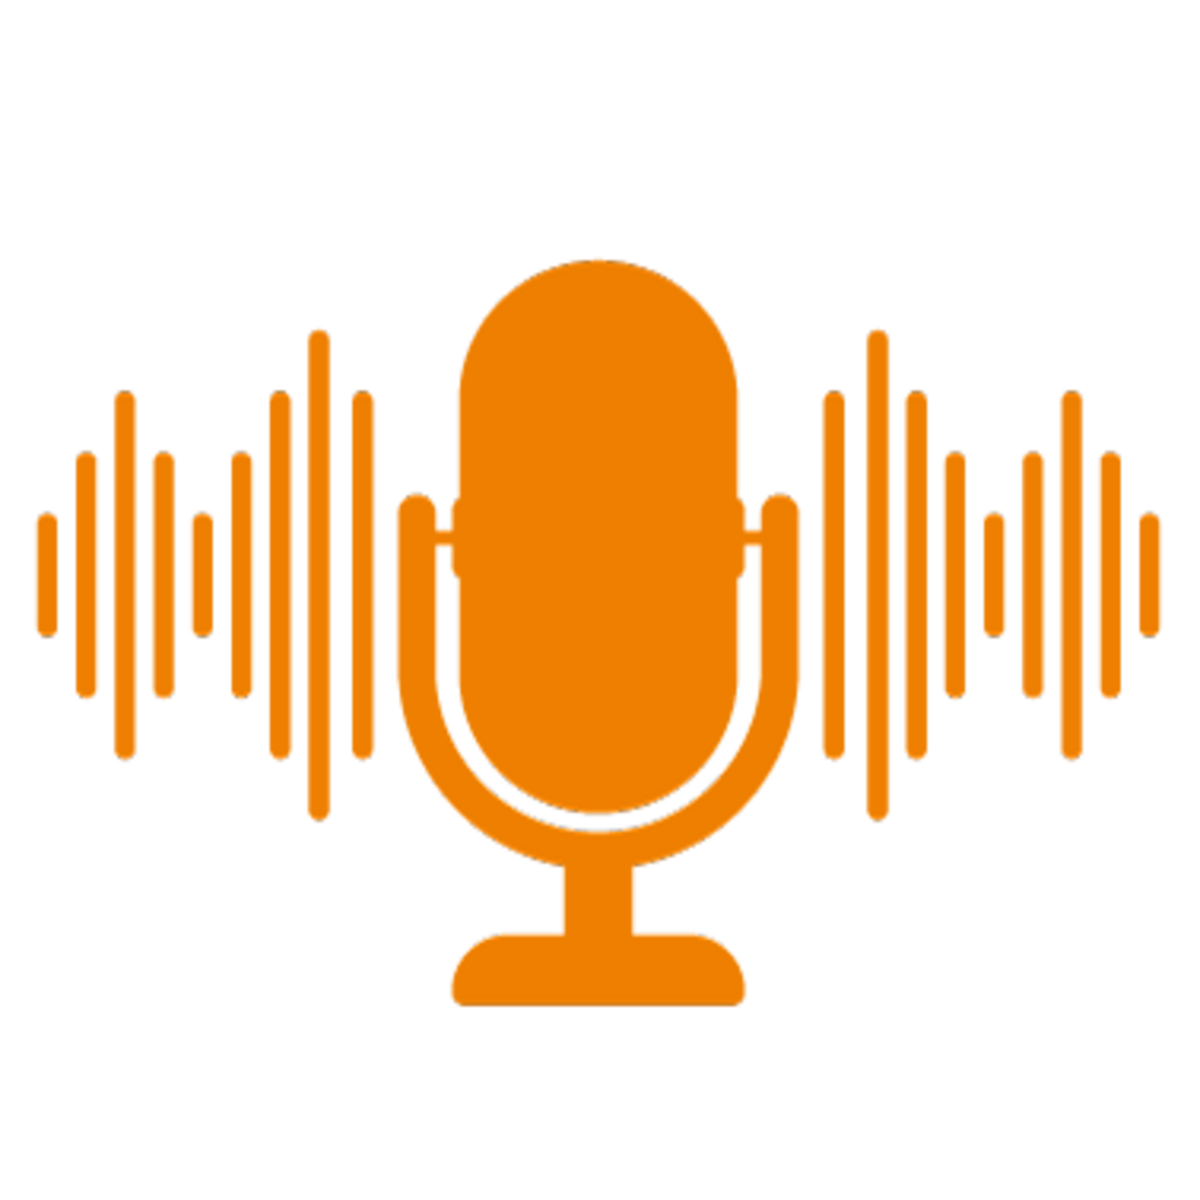 Logo Podcast